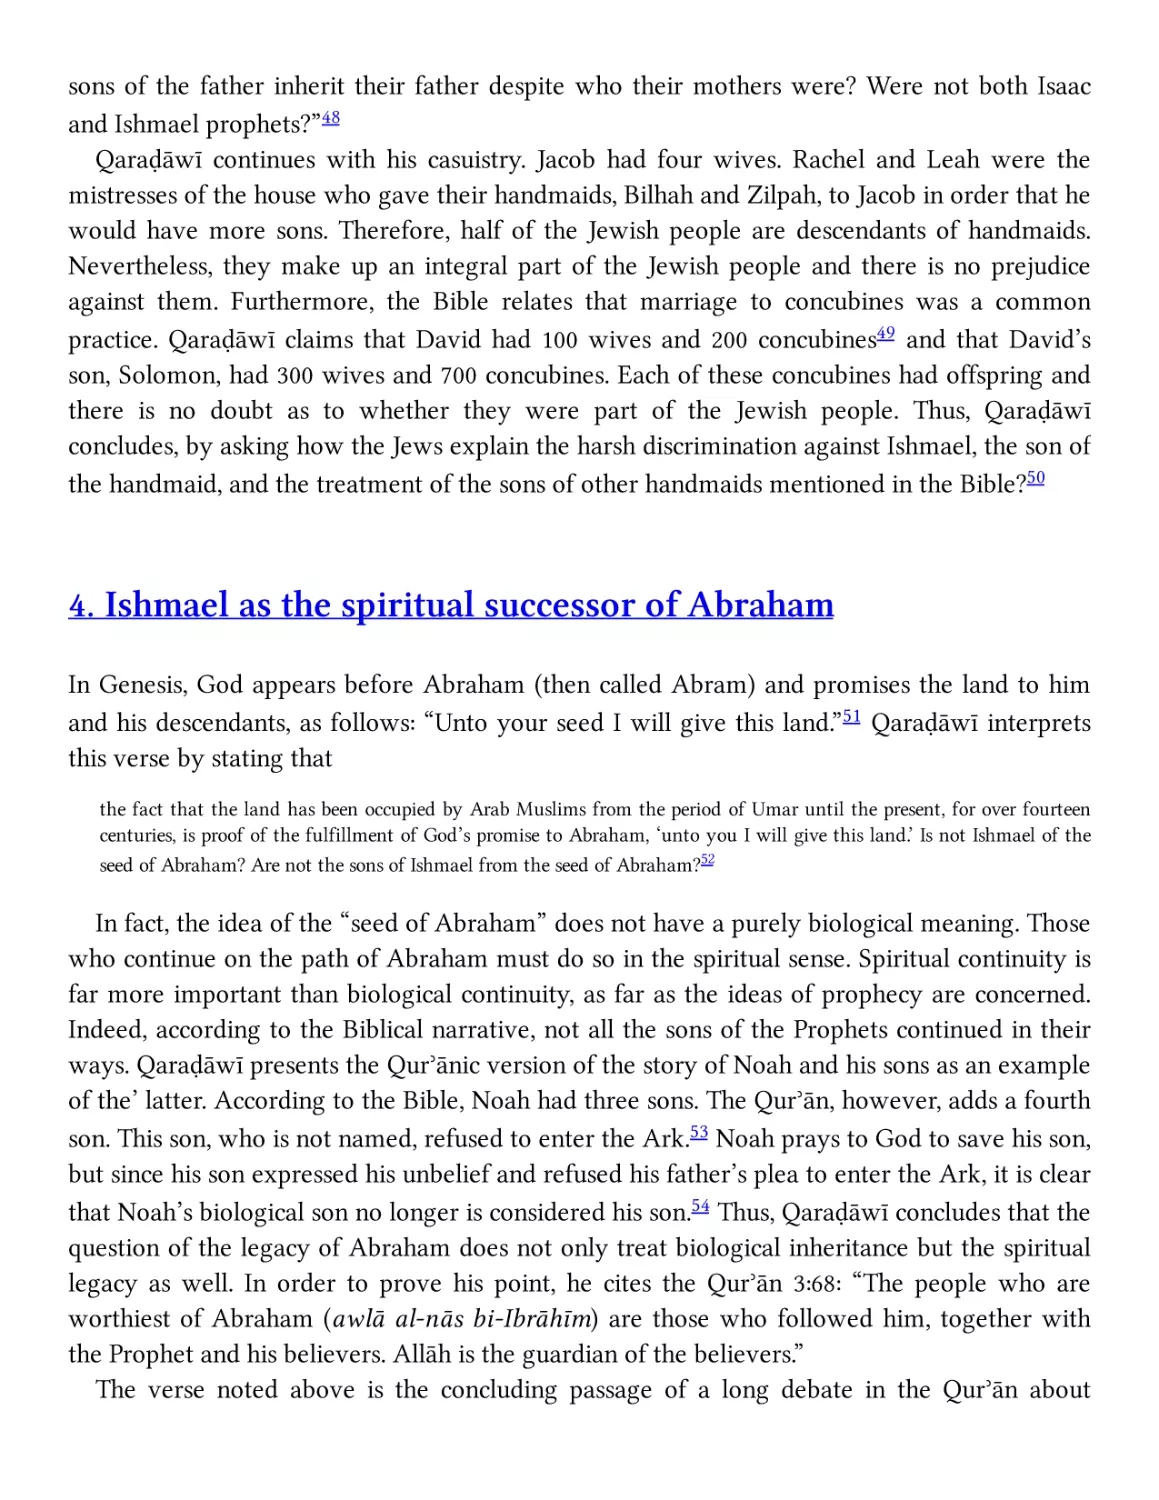 4. Ishmael as the spiritual successor of Abraham